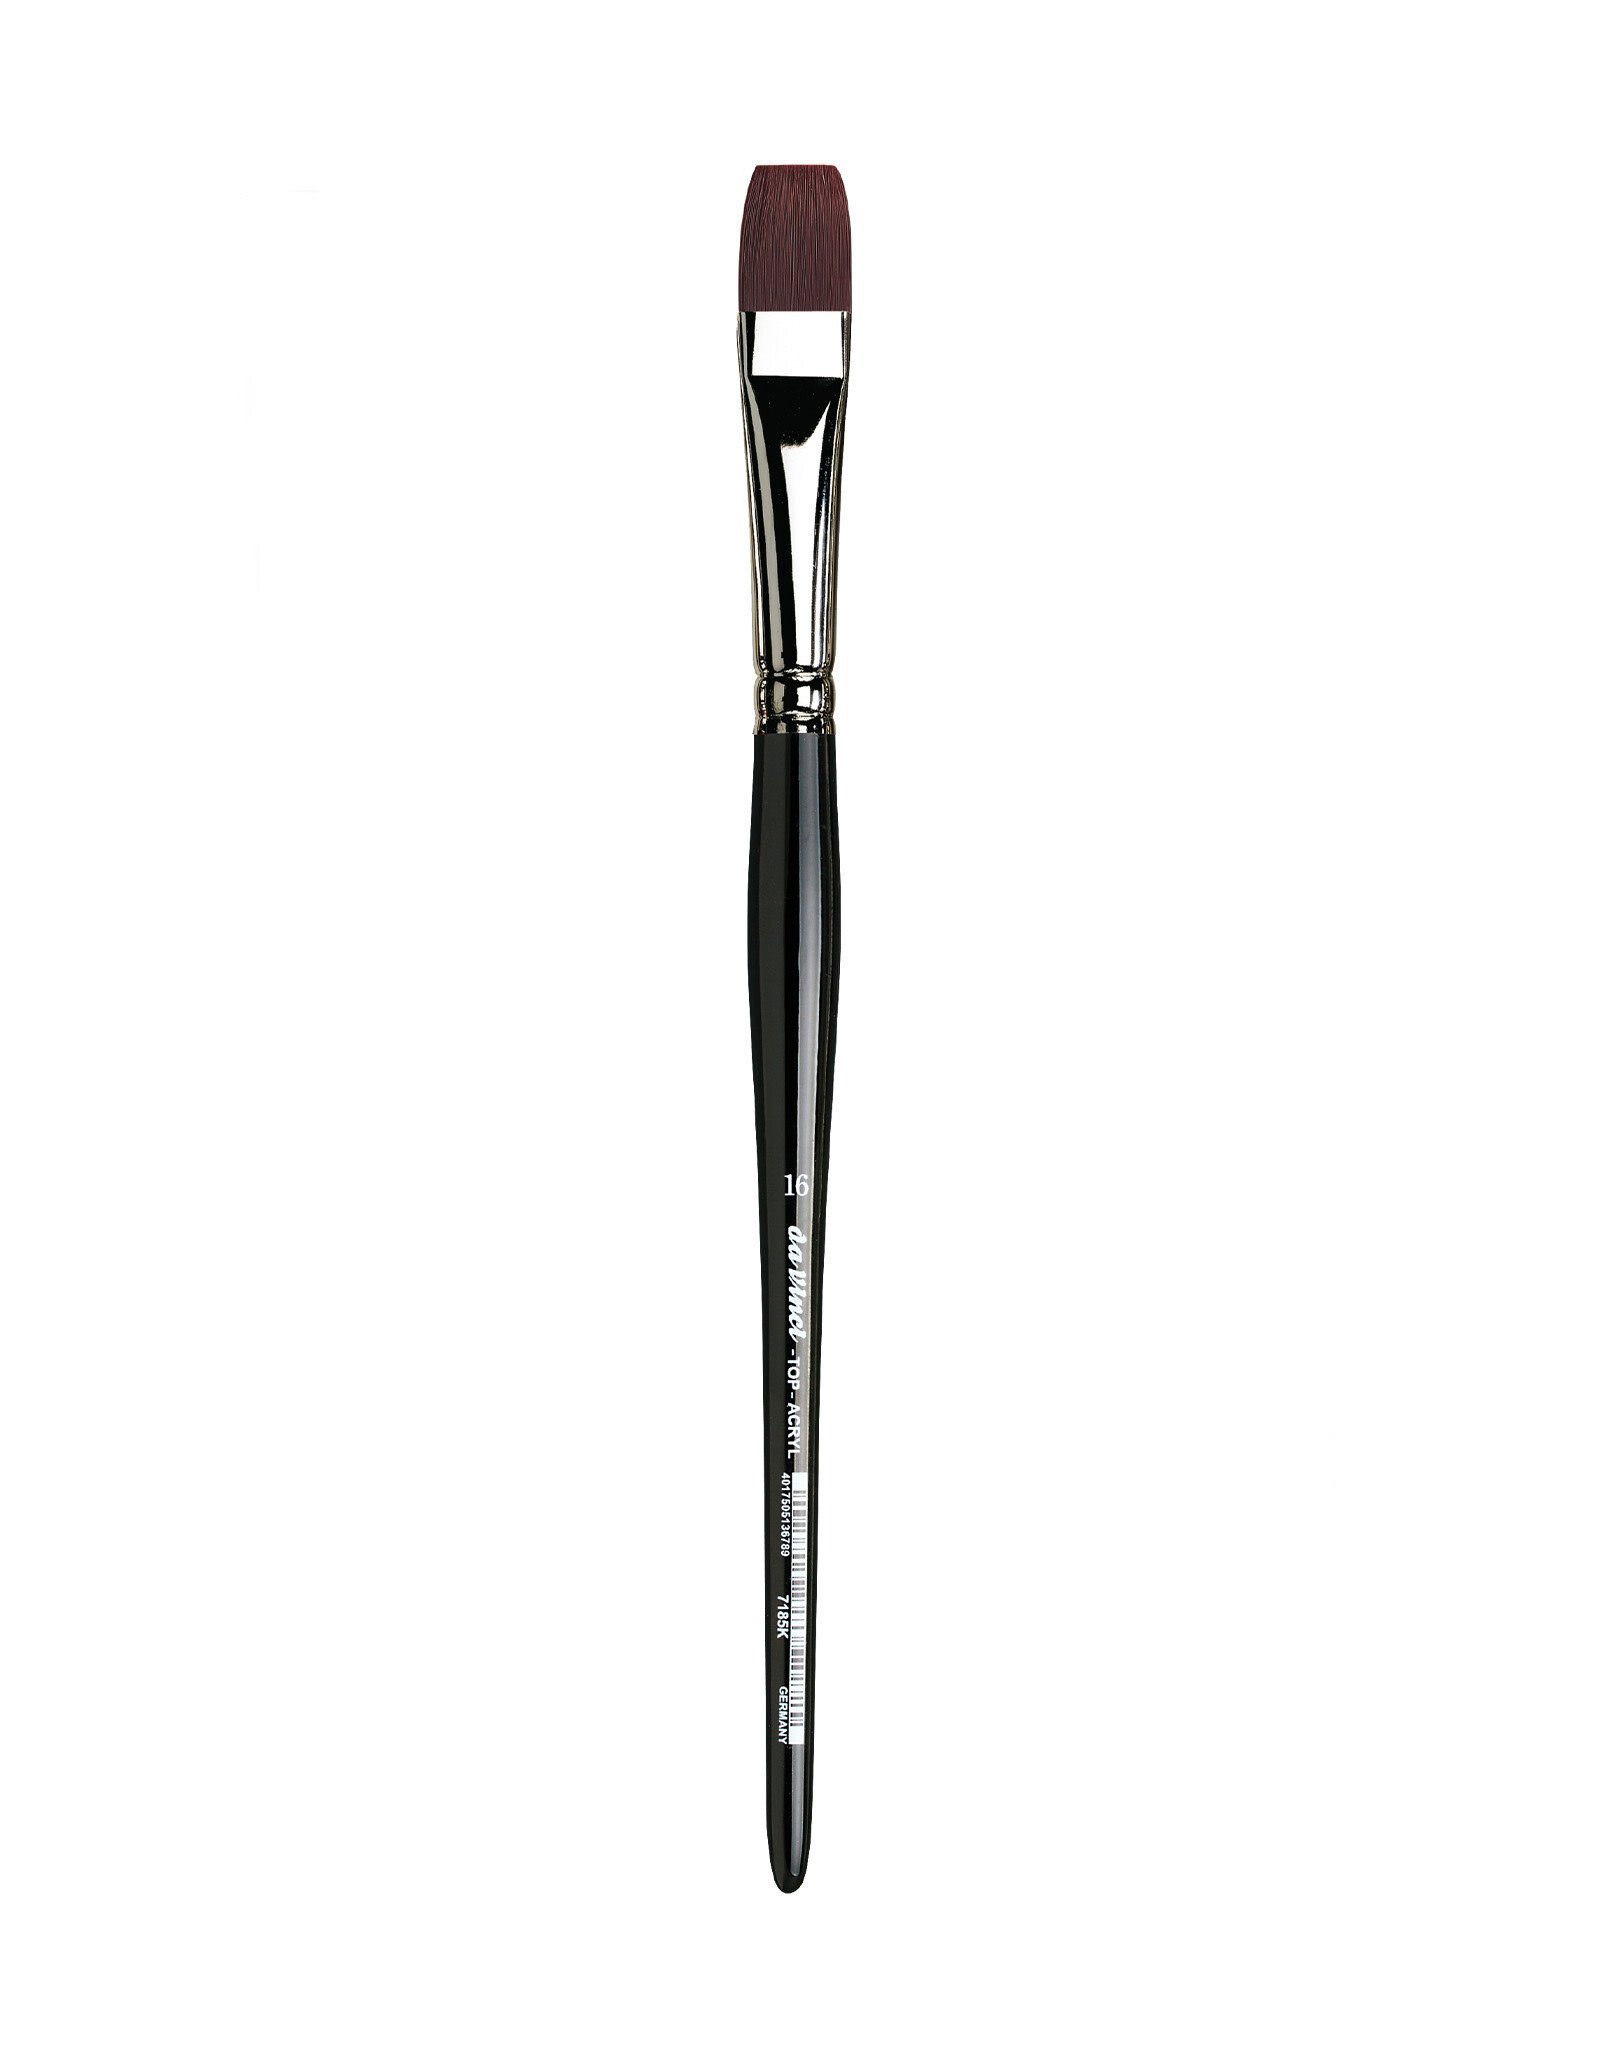 Da Vinci Brush Da Vinci Top Acryl Bright # 16 Short handle.